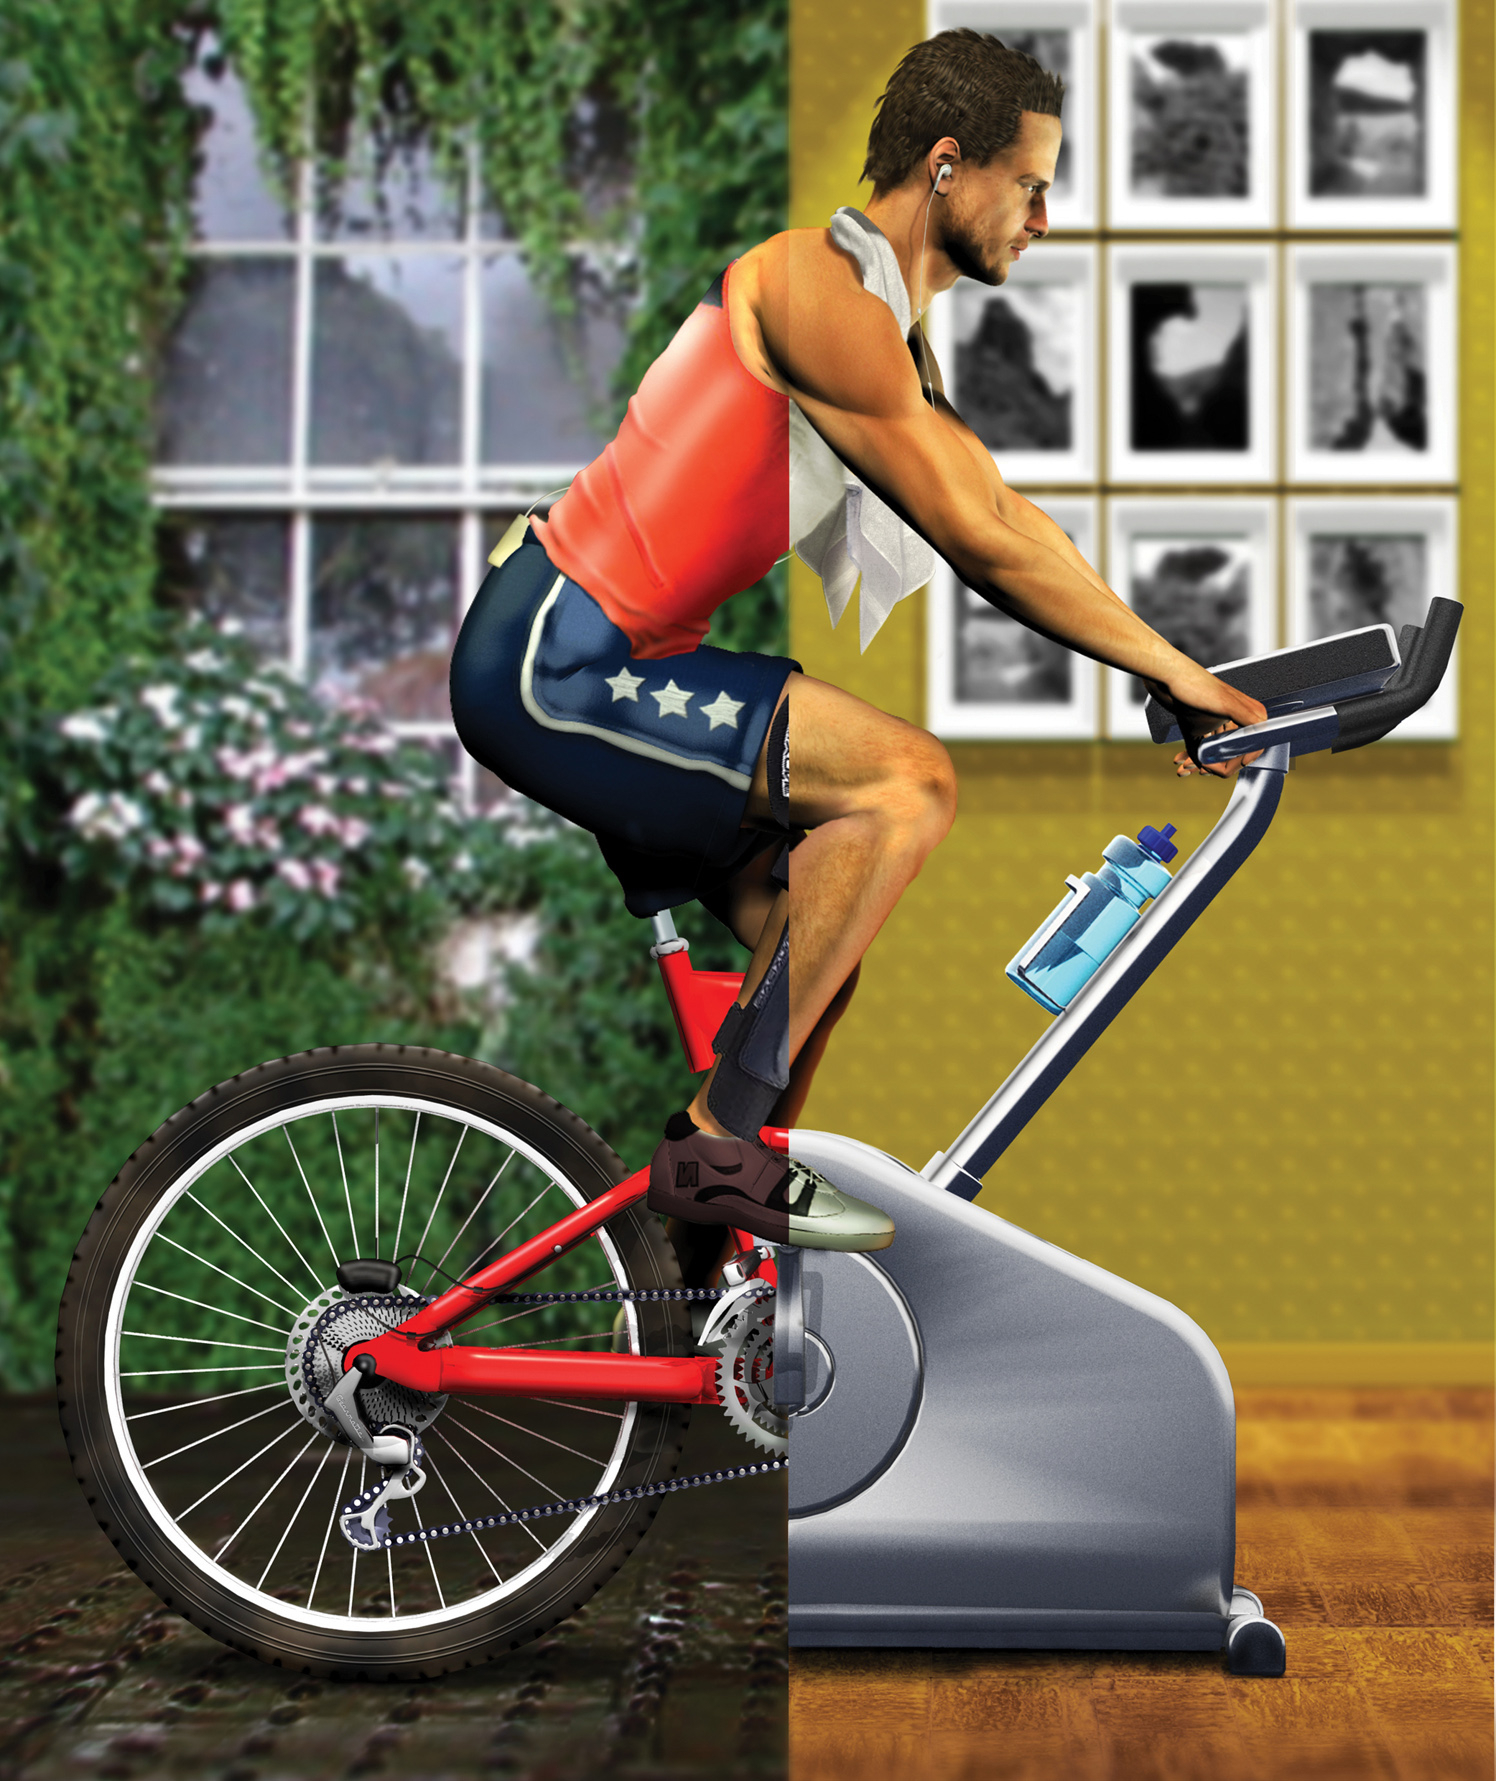 Cycling / Men's Health Magazine